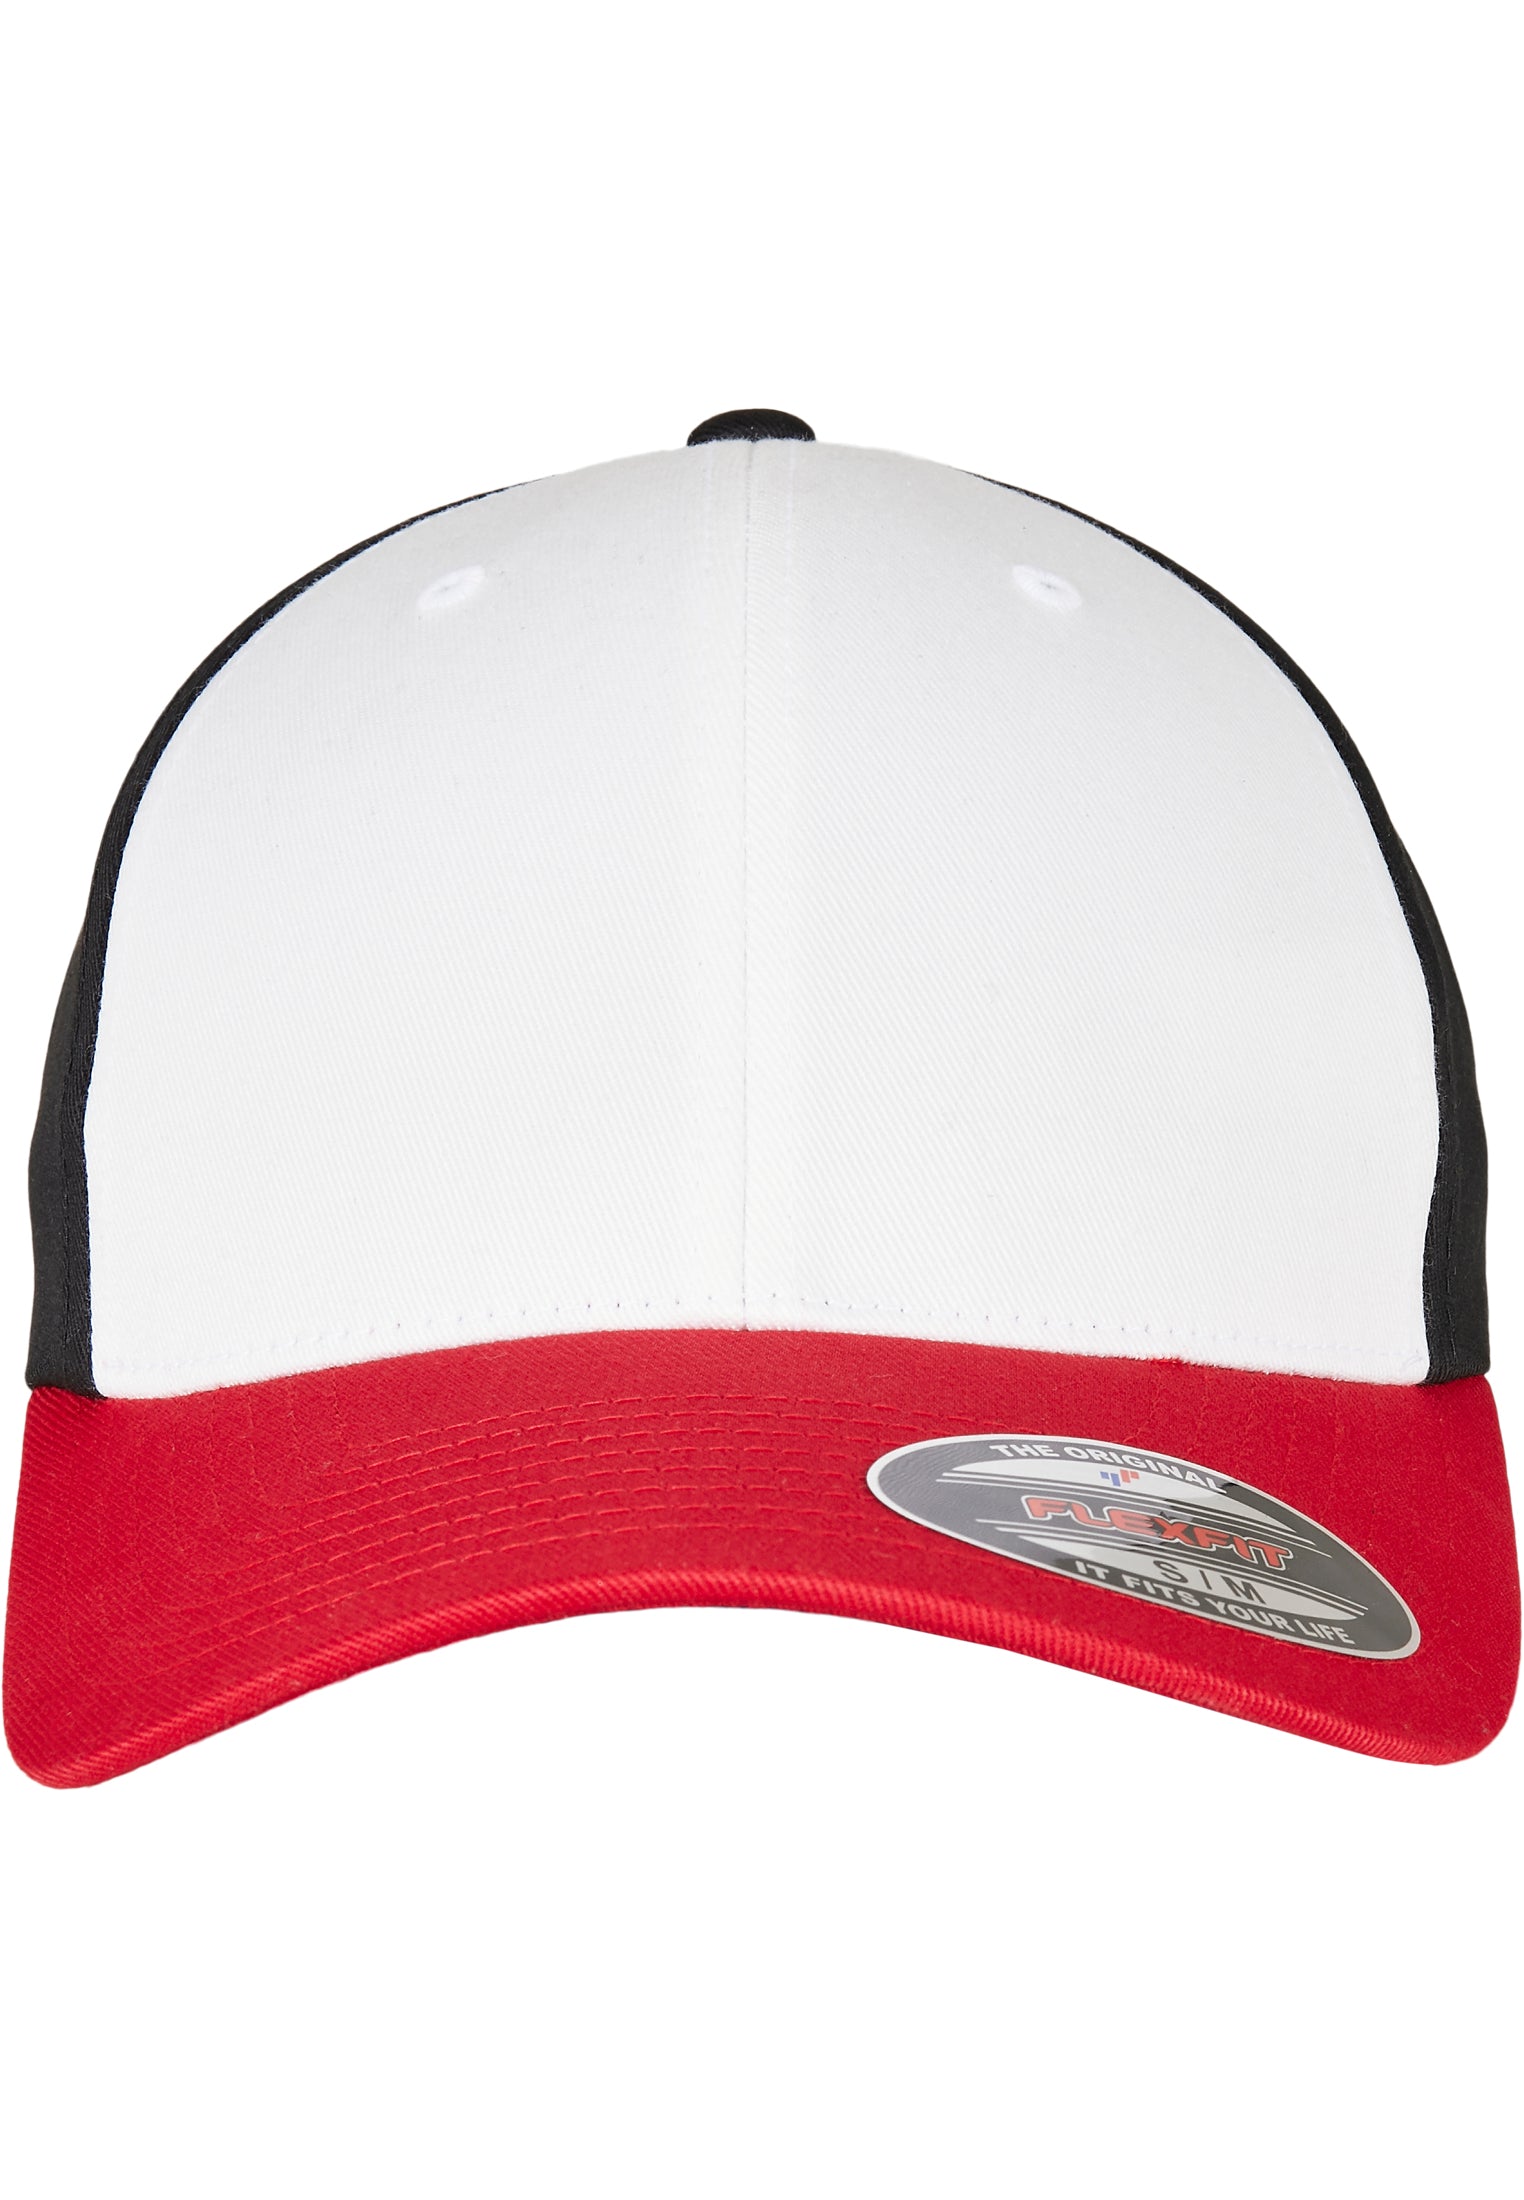 Flexfit Caps WOOLY 3 Red/White/Black CAP 6277TT TONE COMBED